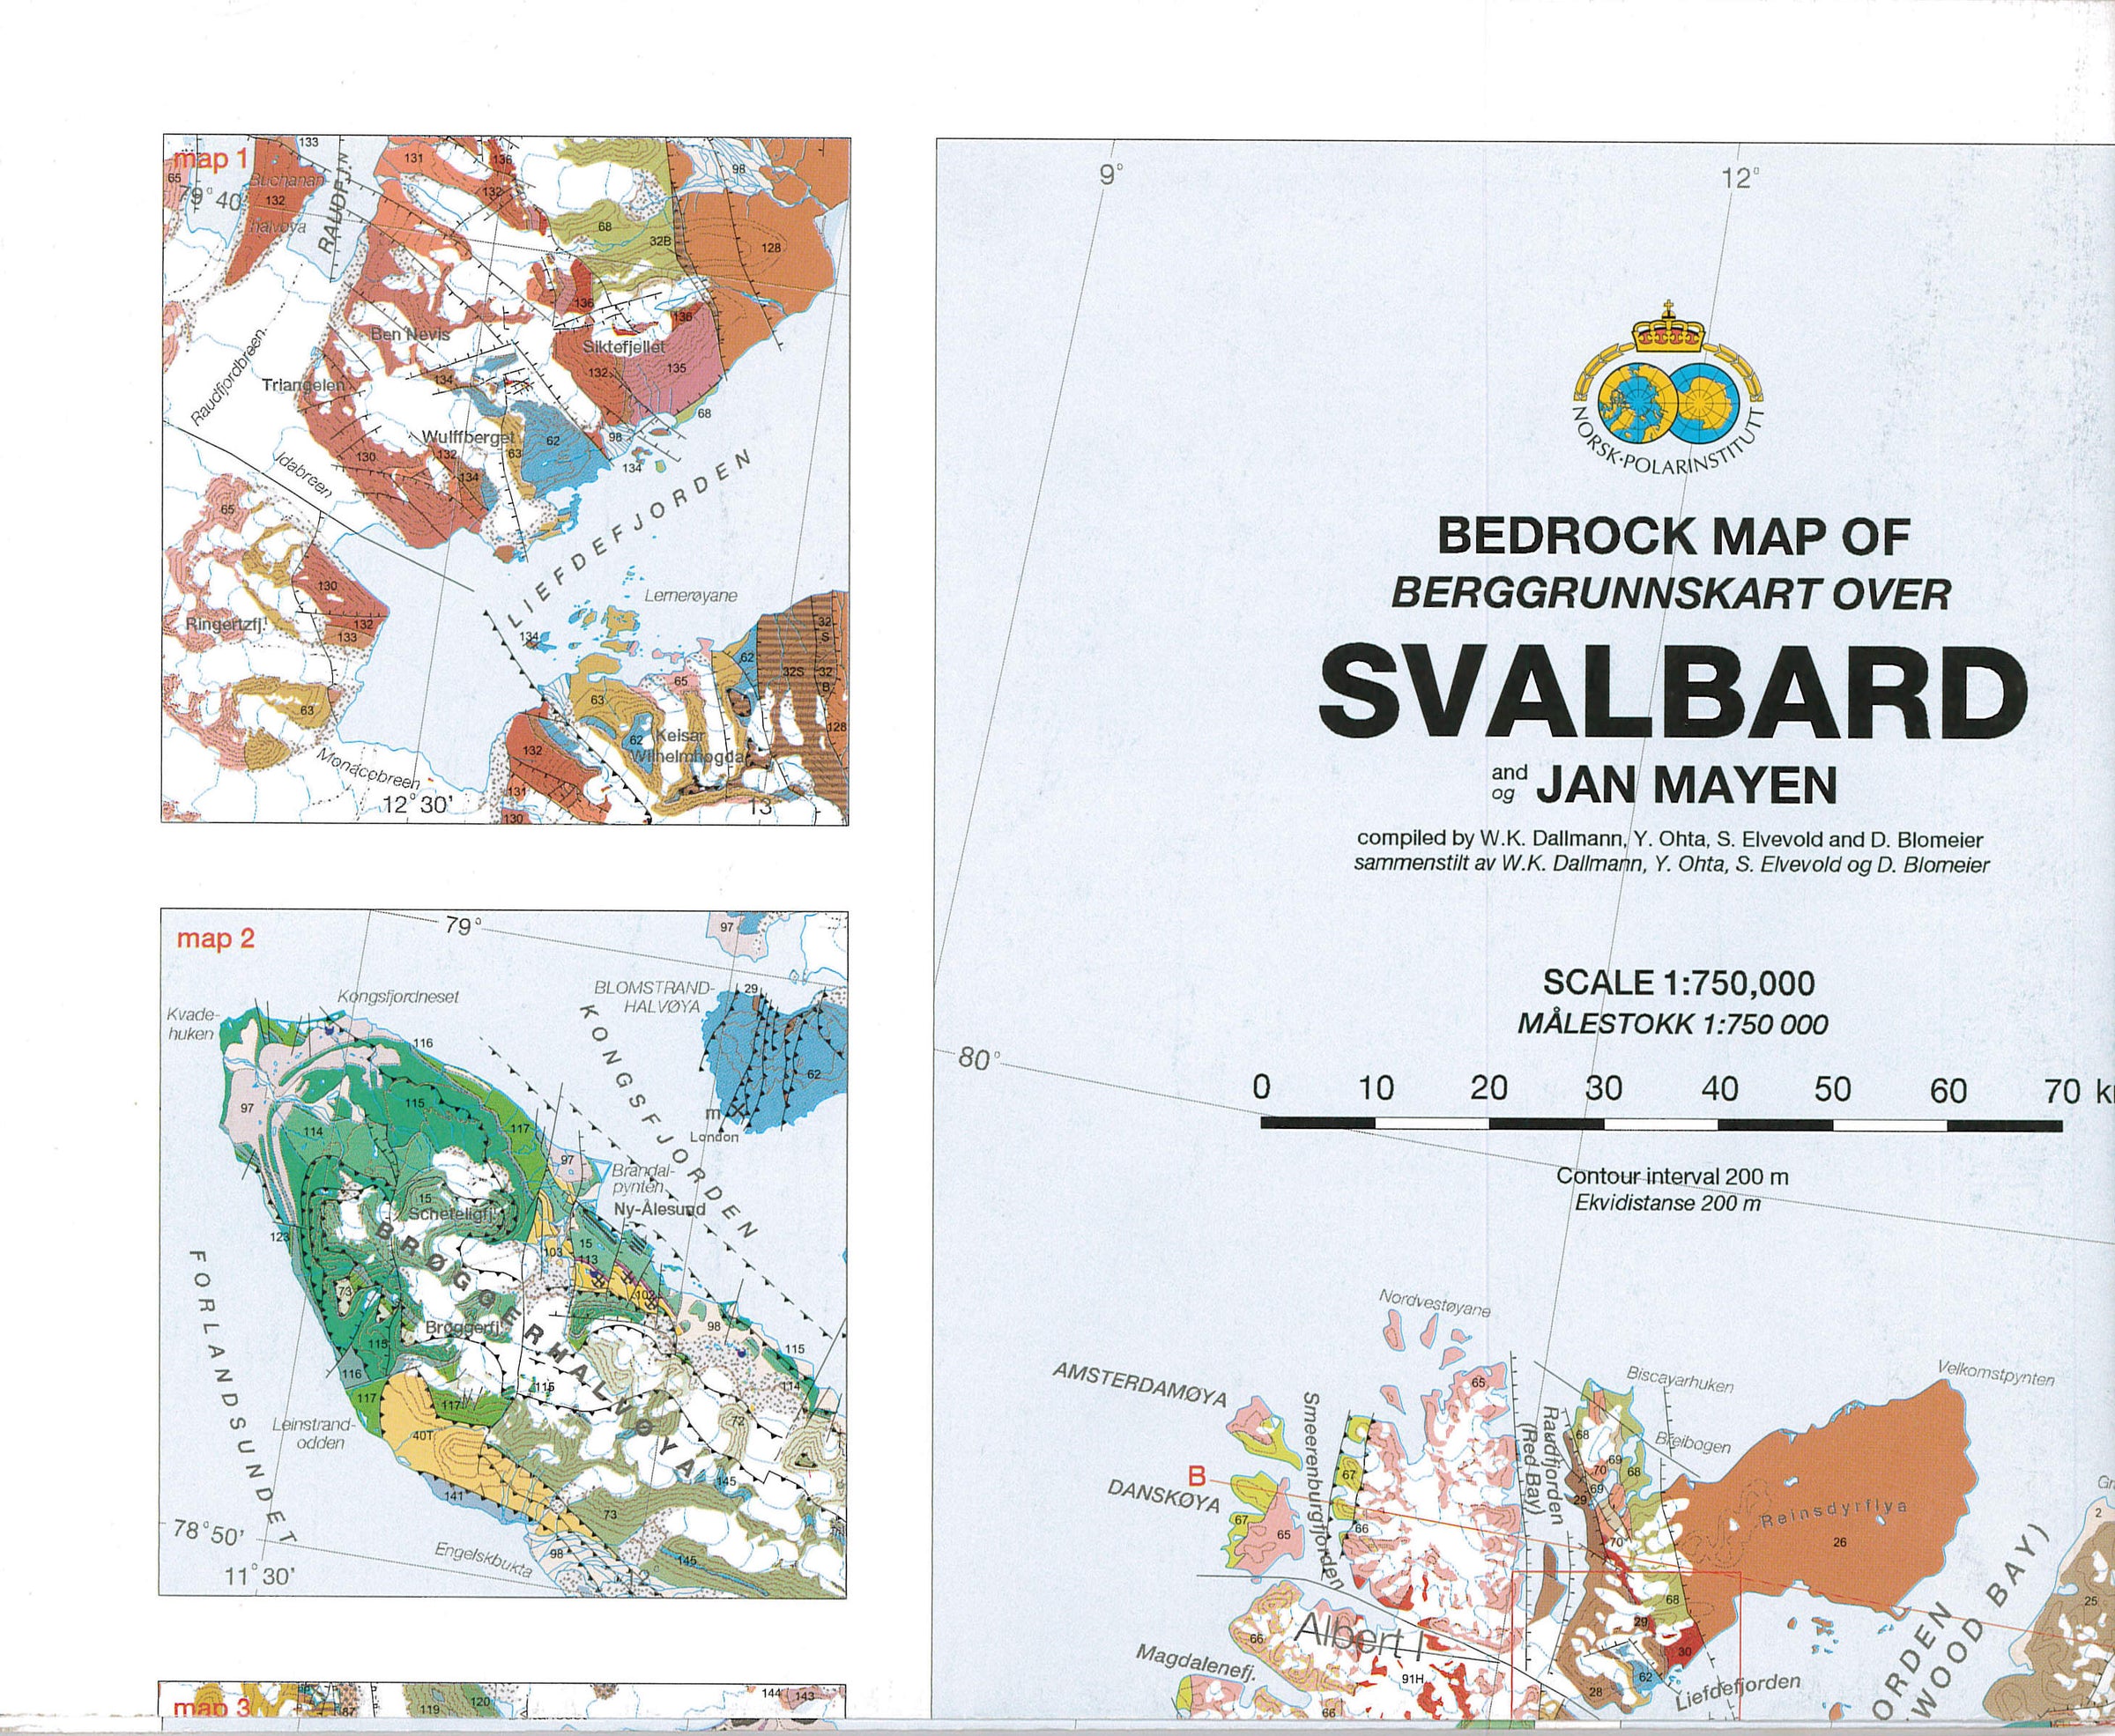 Bedrock Map of Svalbard and Jan Mayen (Berggrunnskart) 1:750.000